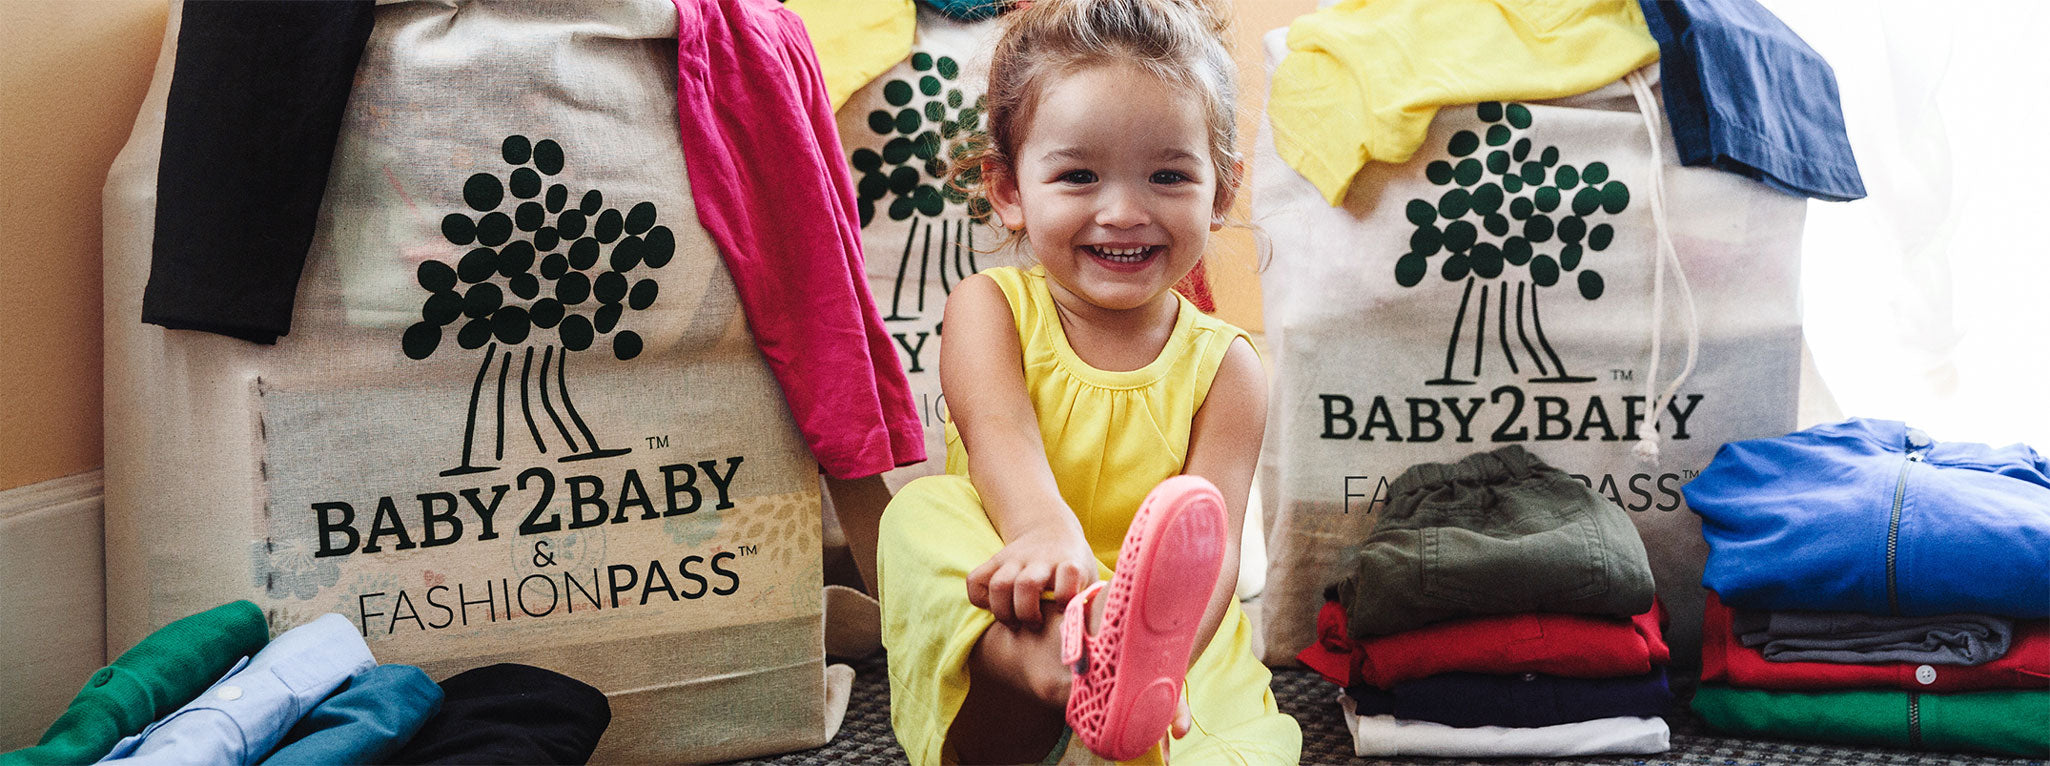 Girl wearing FashionPass sponsored Baby2Baby clothing dress donation